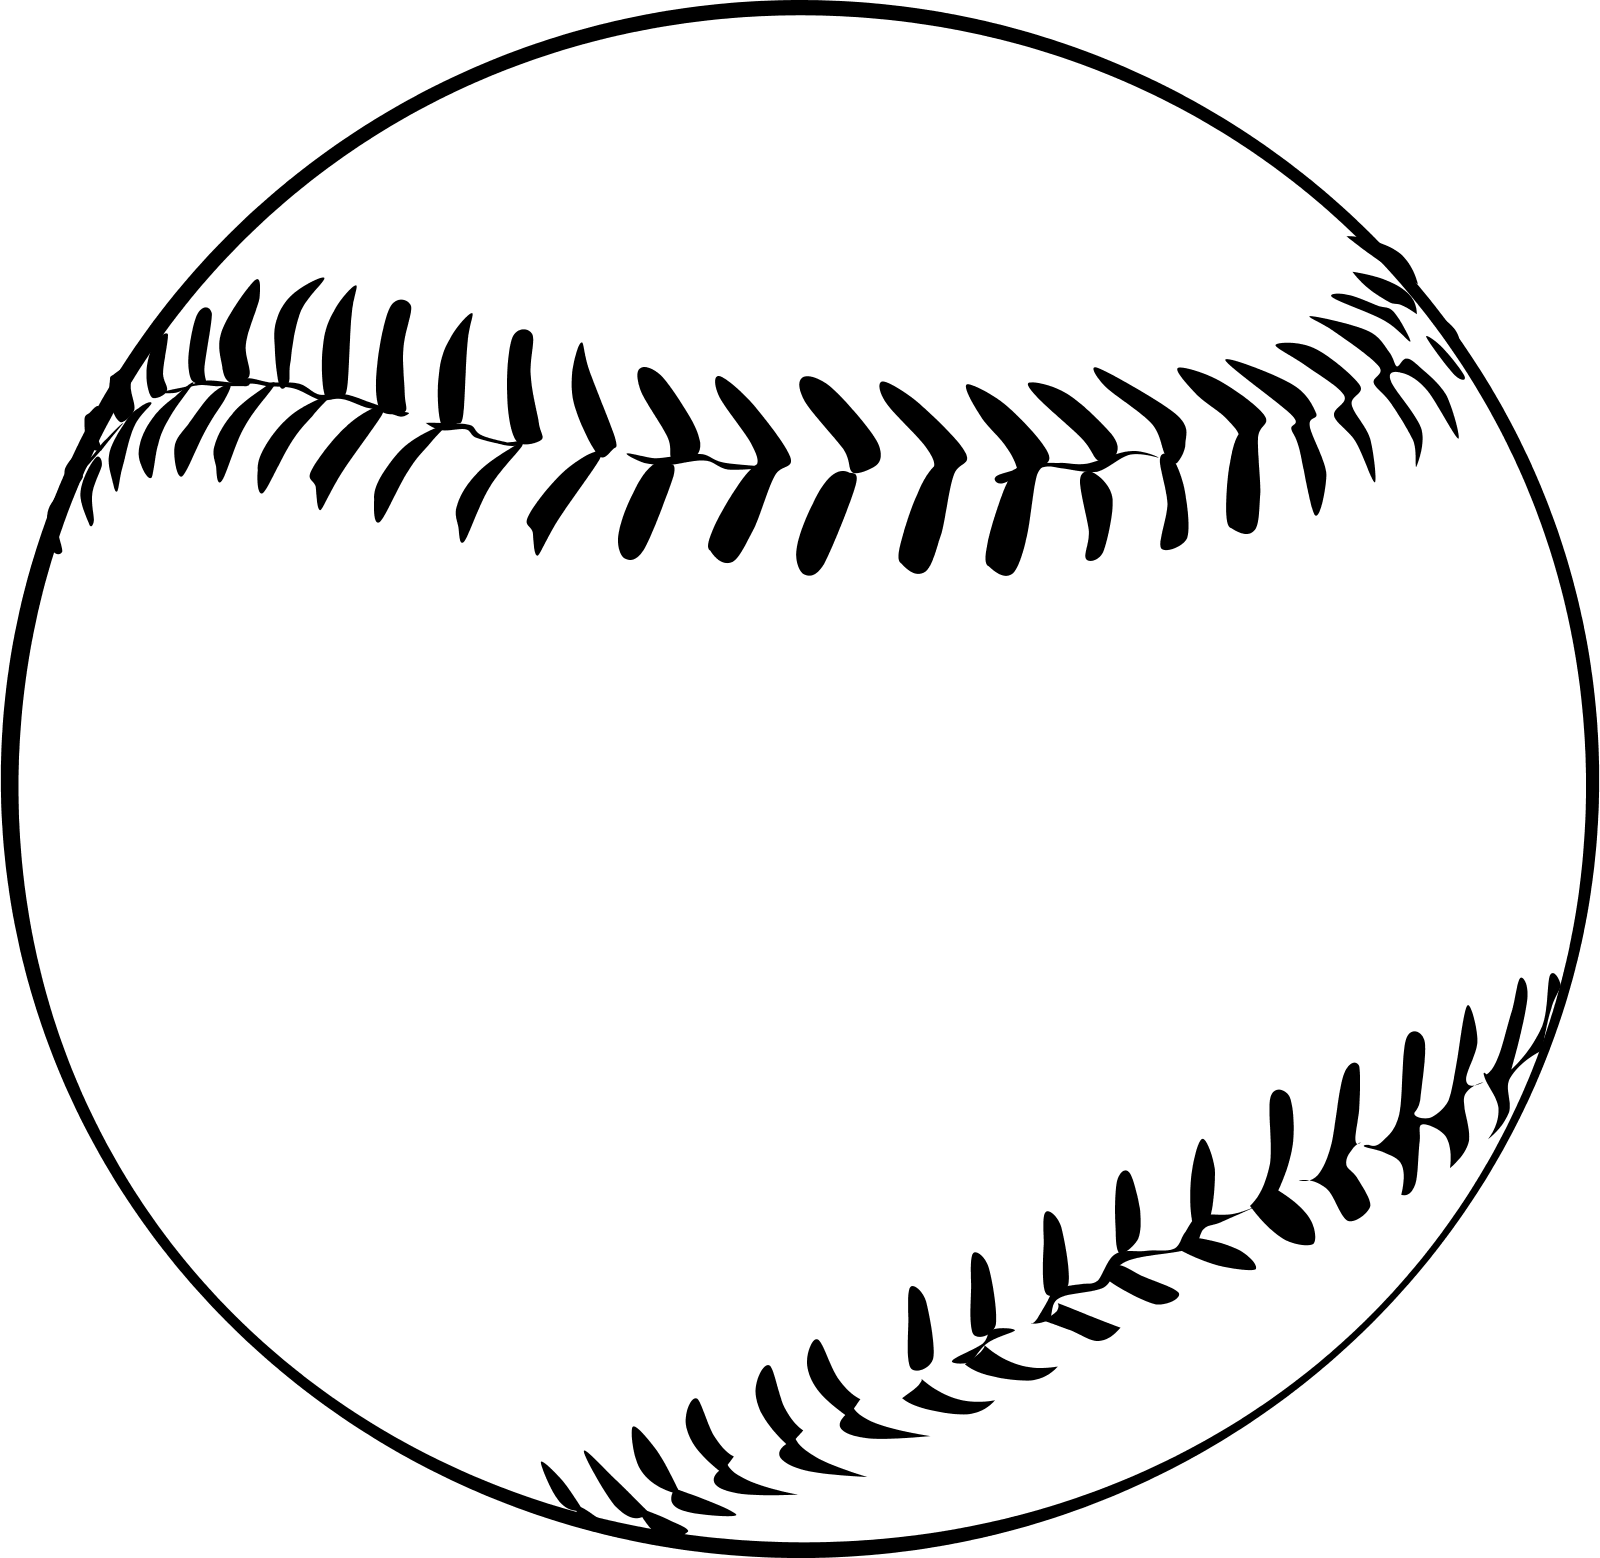 Free Softball Vector Images - Free Softball Clipart